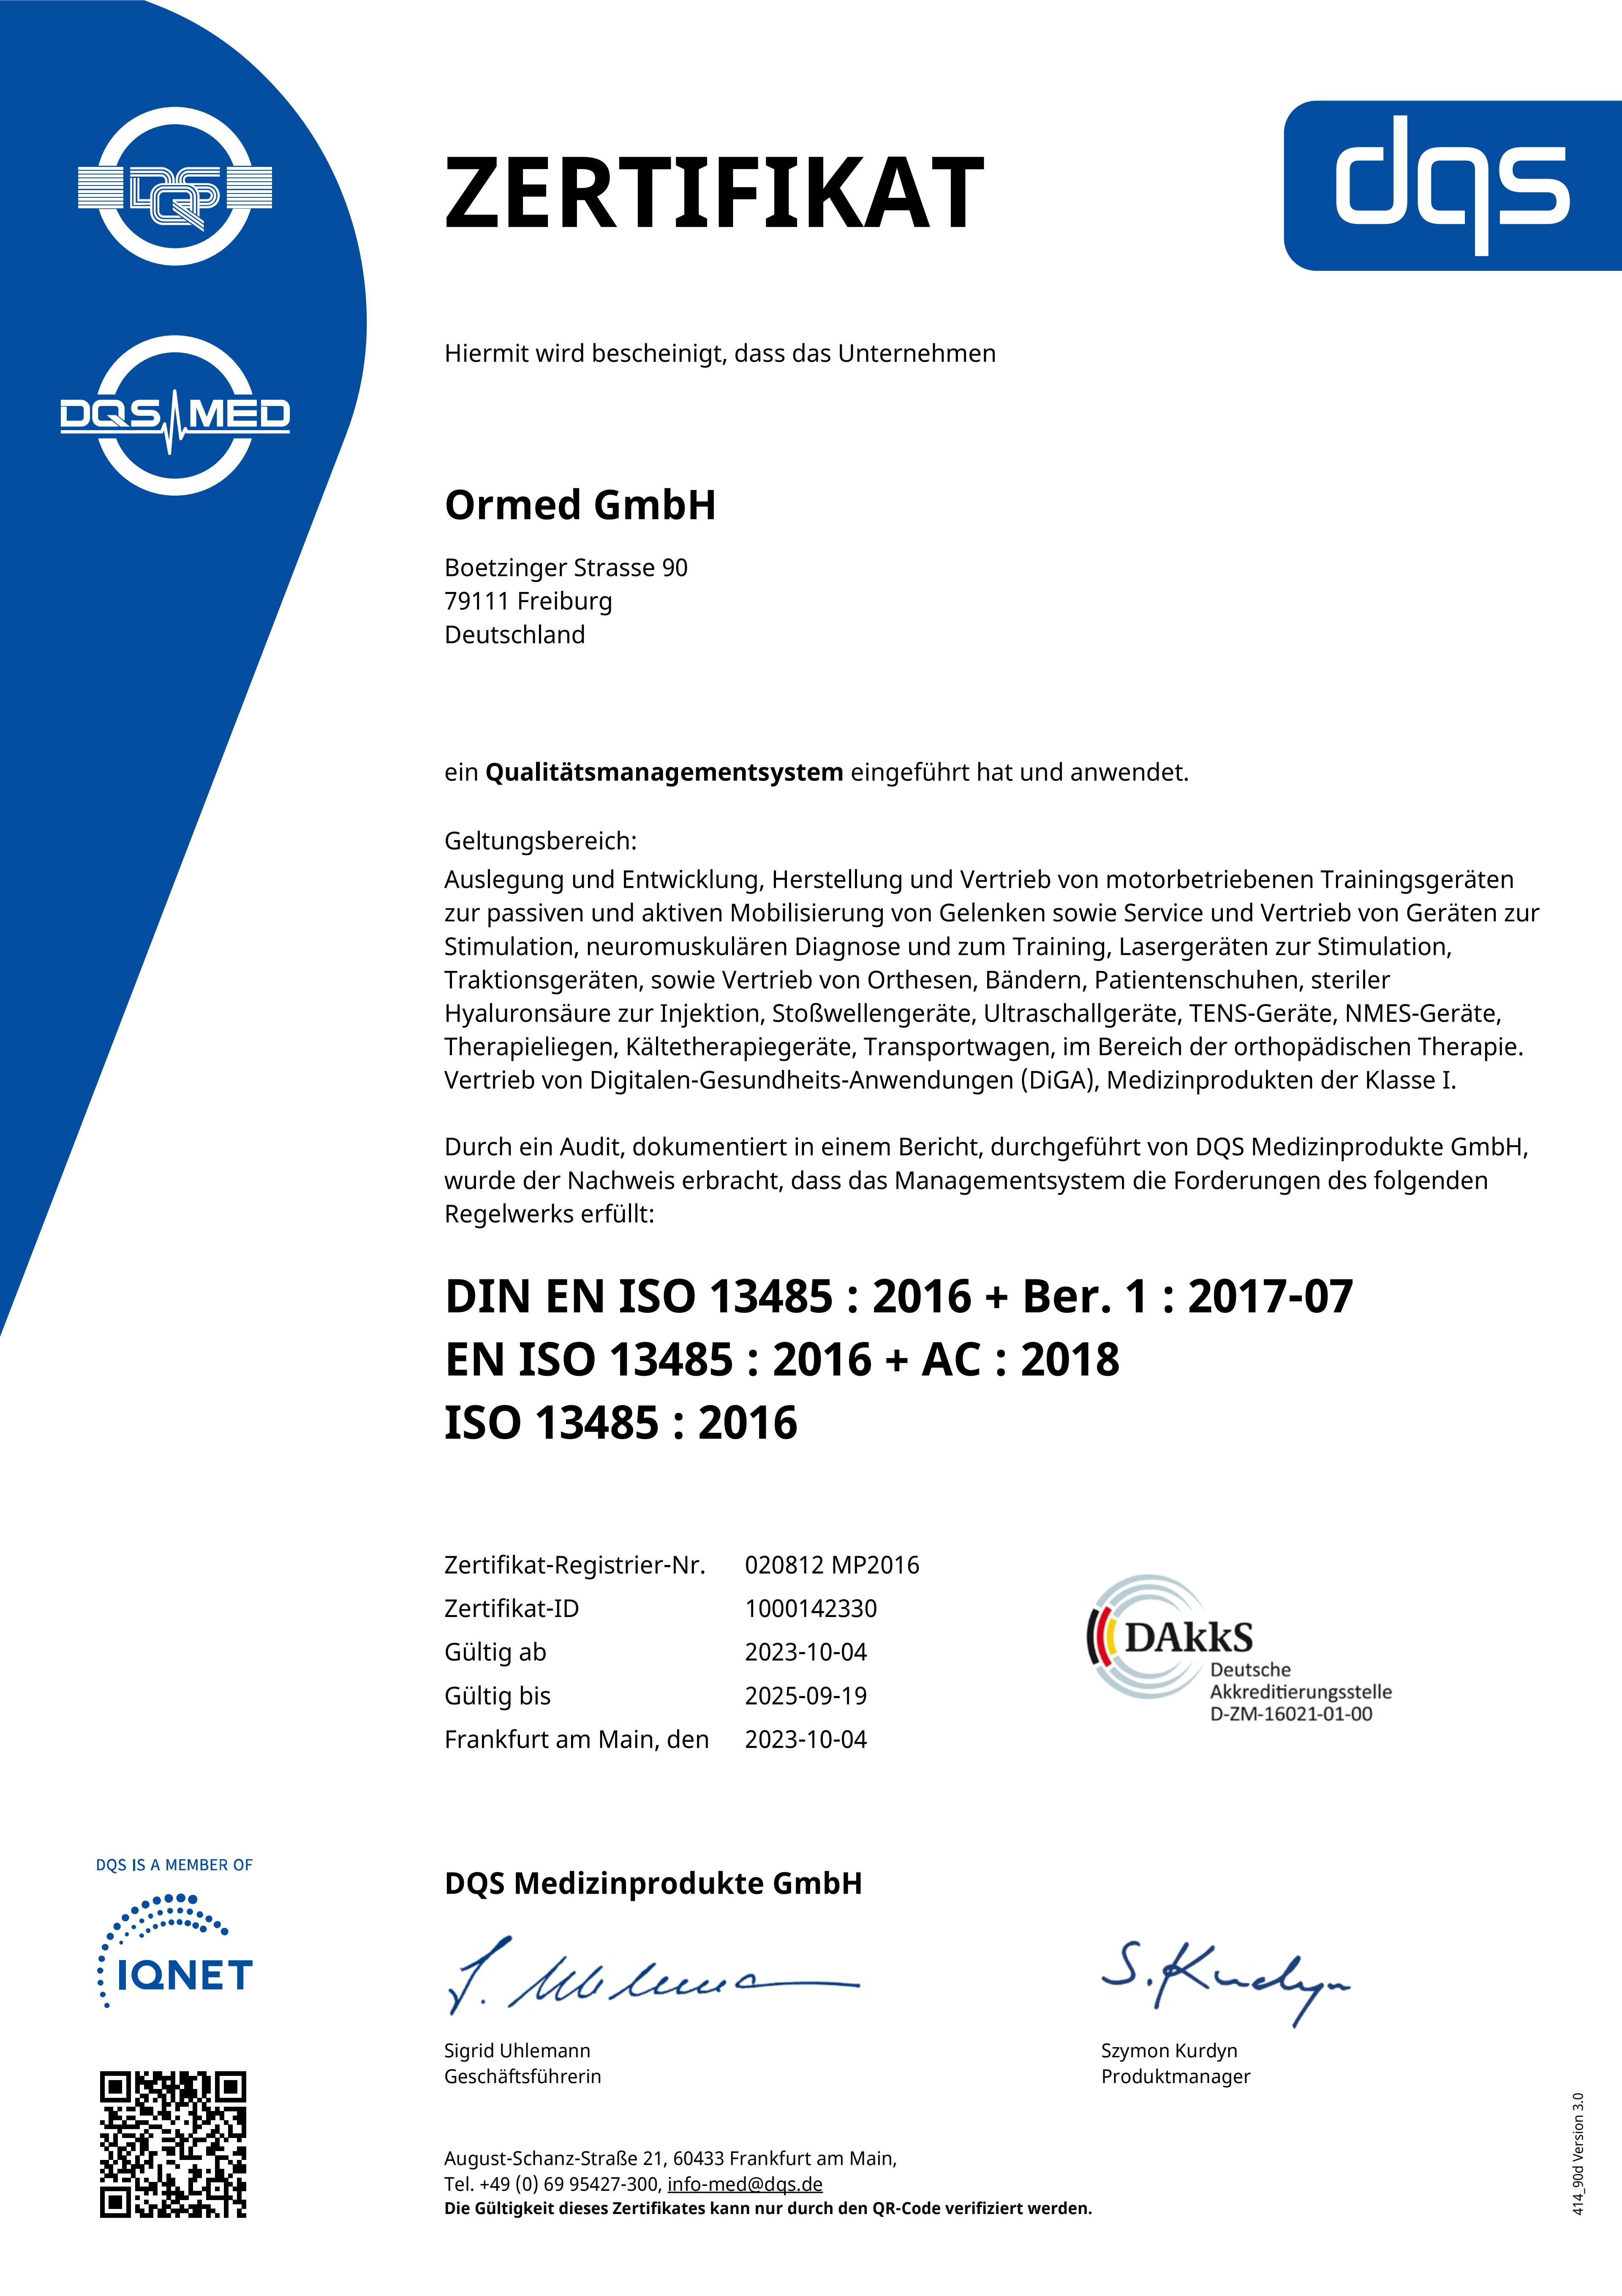 020812 - Ormed GmbH - CERTIFICATE - deutsch - 2022-09-20 - MP2016.pdf